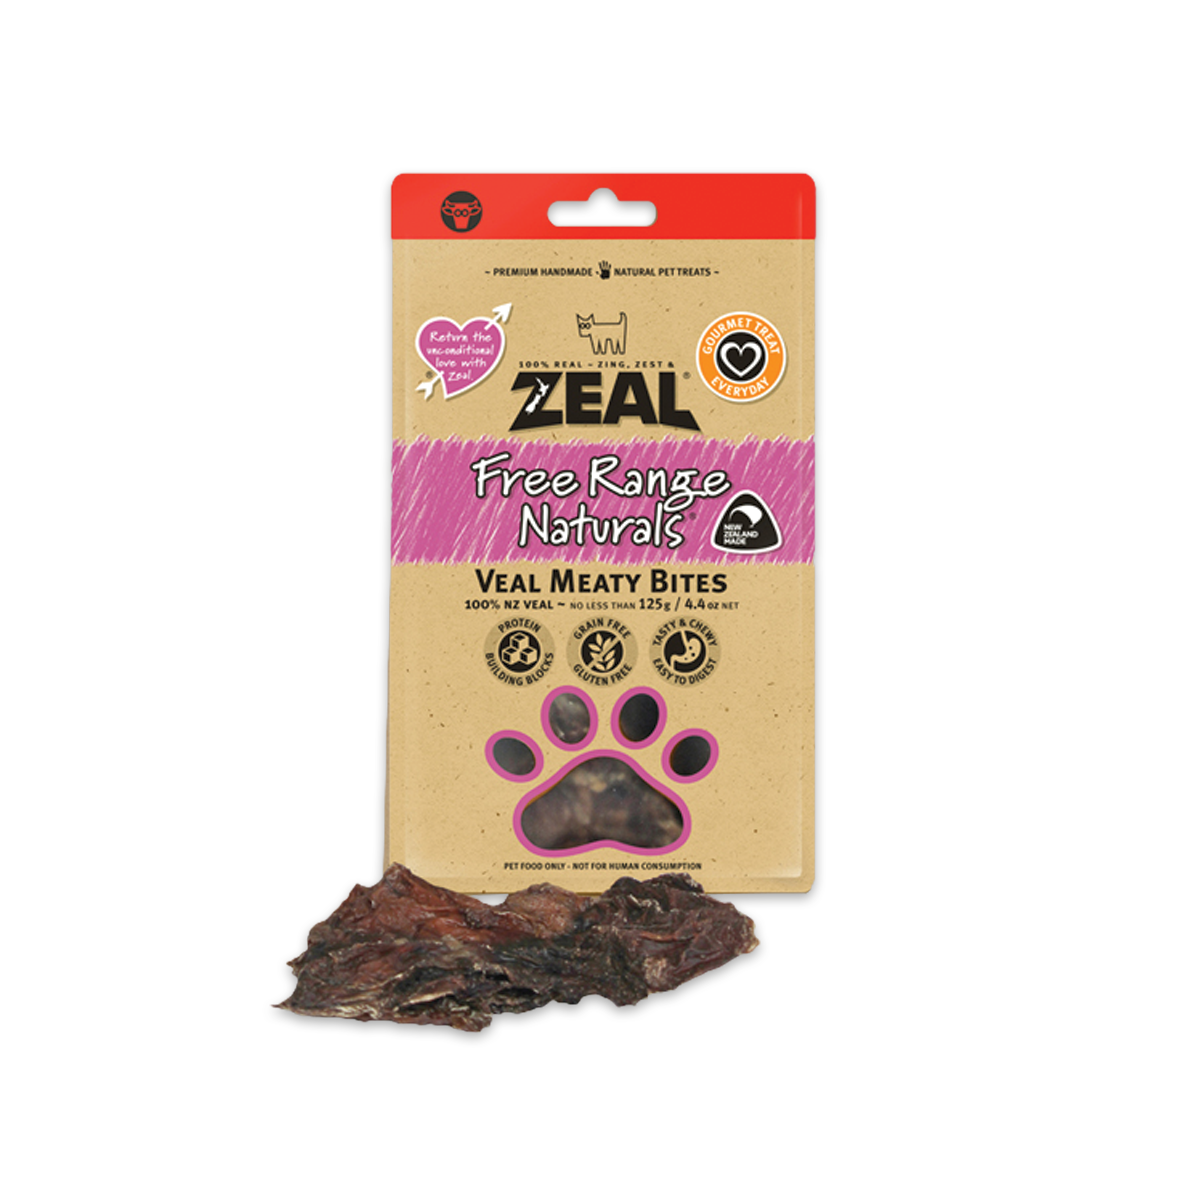 Zeal Freeze Dried Veal Meaty Bites 125g - Thịt bê sấy cho chó